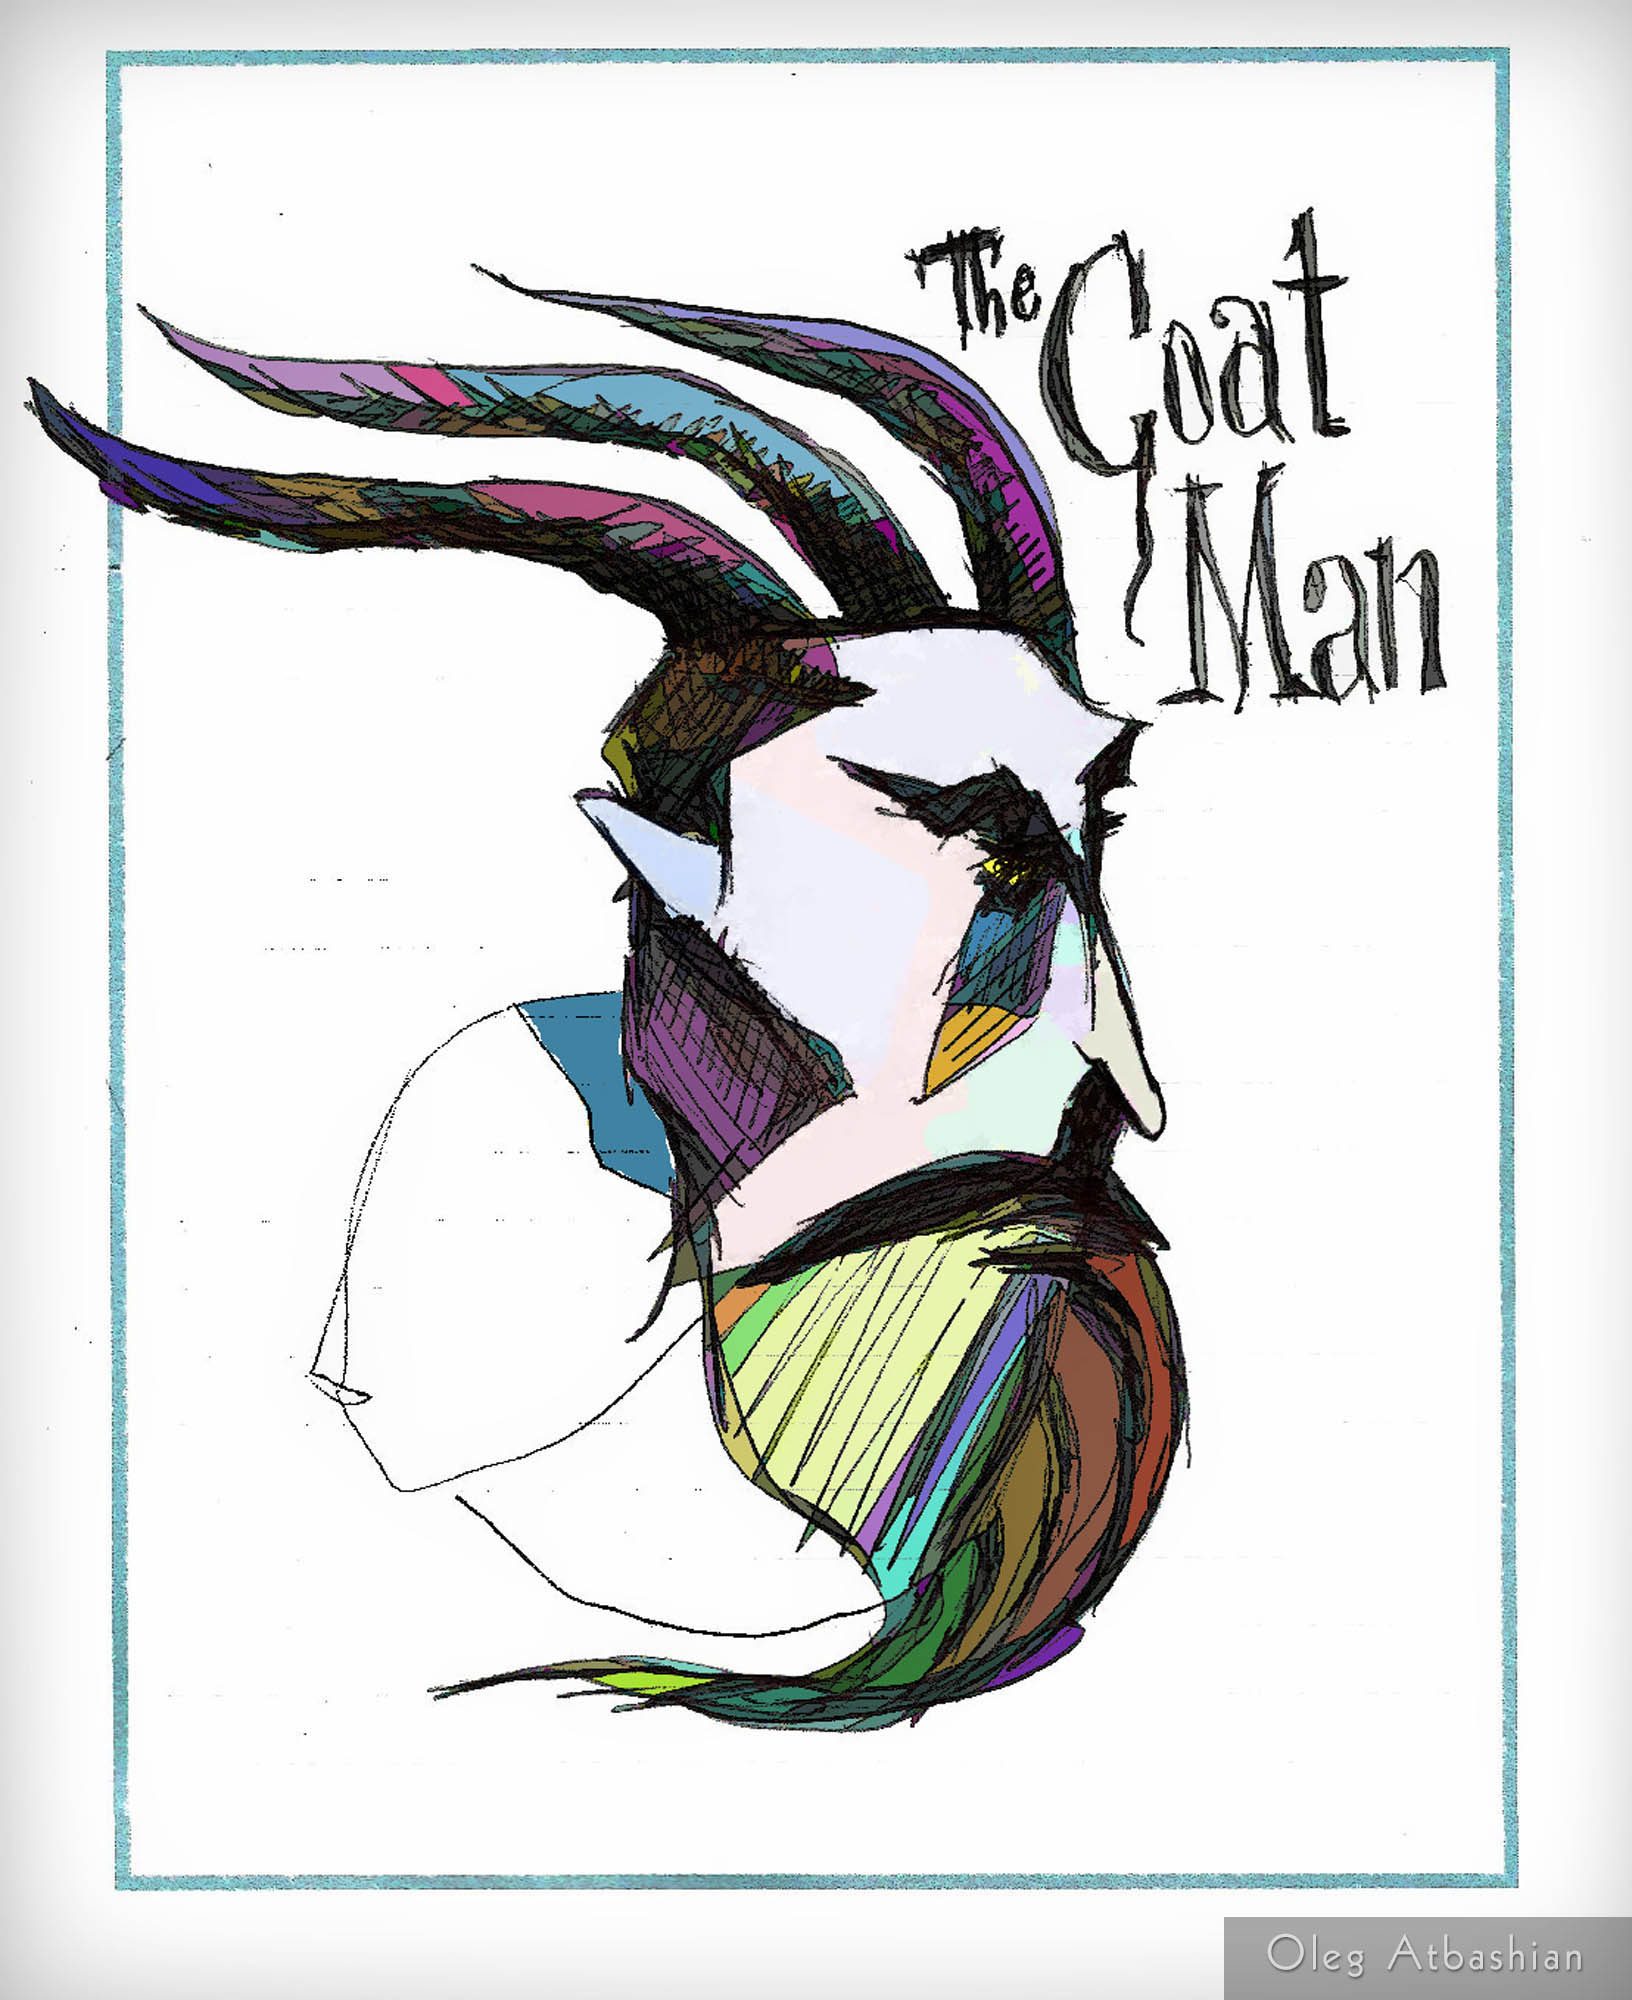 Cartoon: The Goat Man